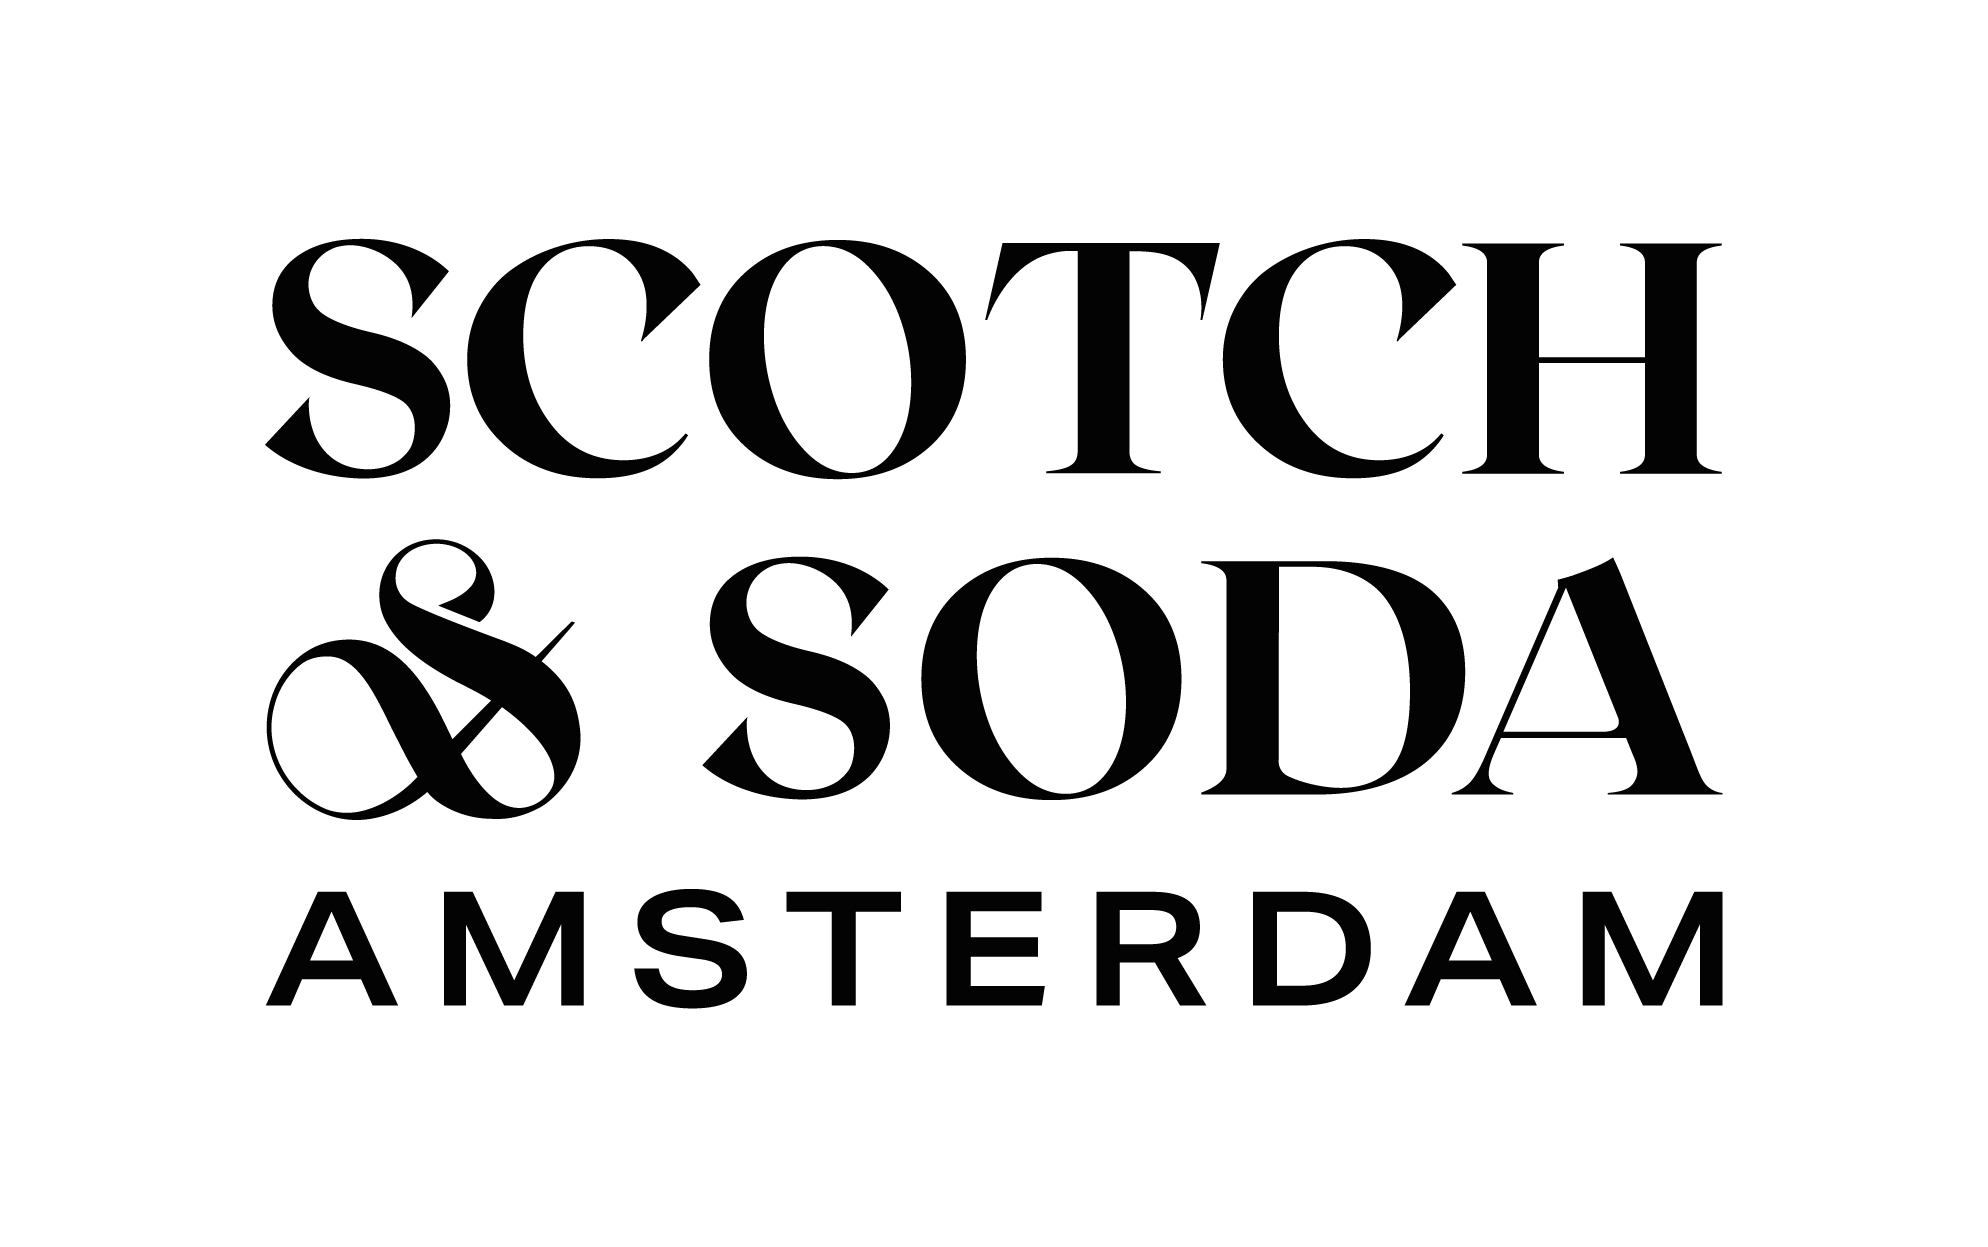 15% Off Scotch & Soda Coupons & Promo Codes - April 2022